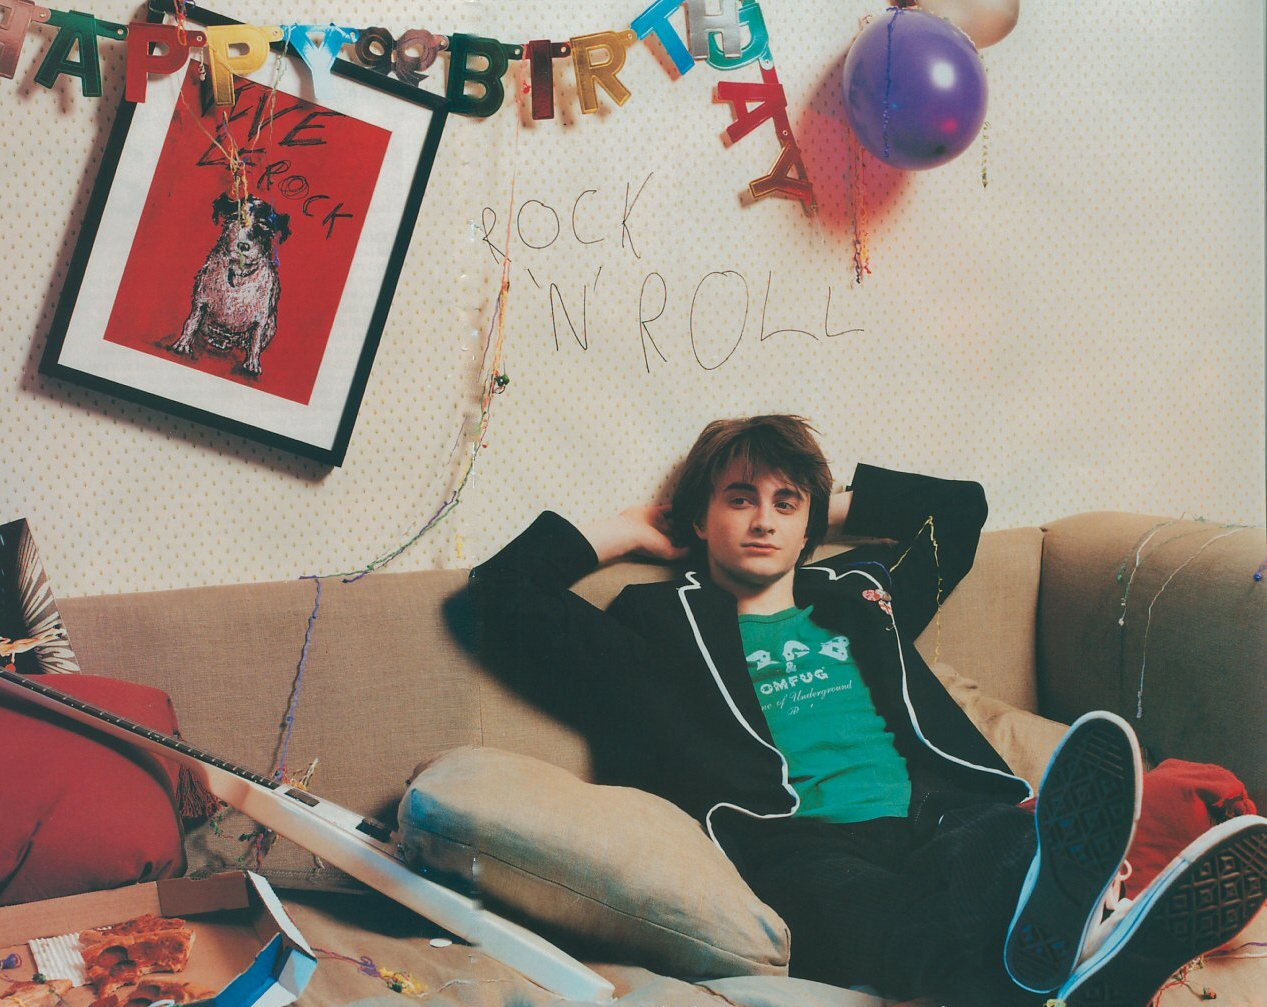 Daniel Radcliffe photo 16 of 531 pics, wallpaper - photo #51441 - ThePlace2